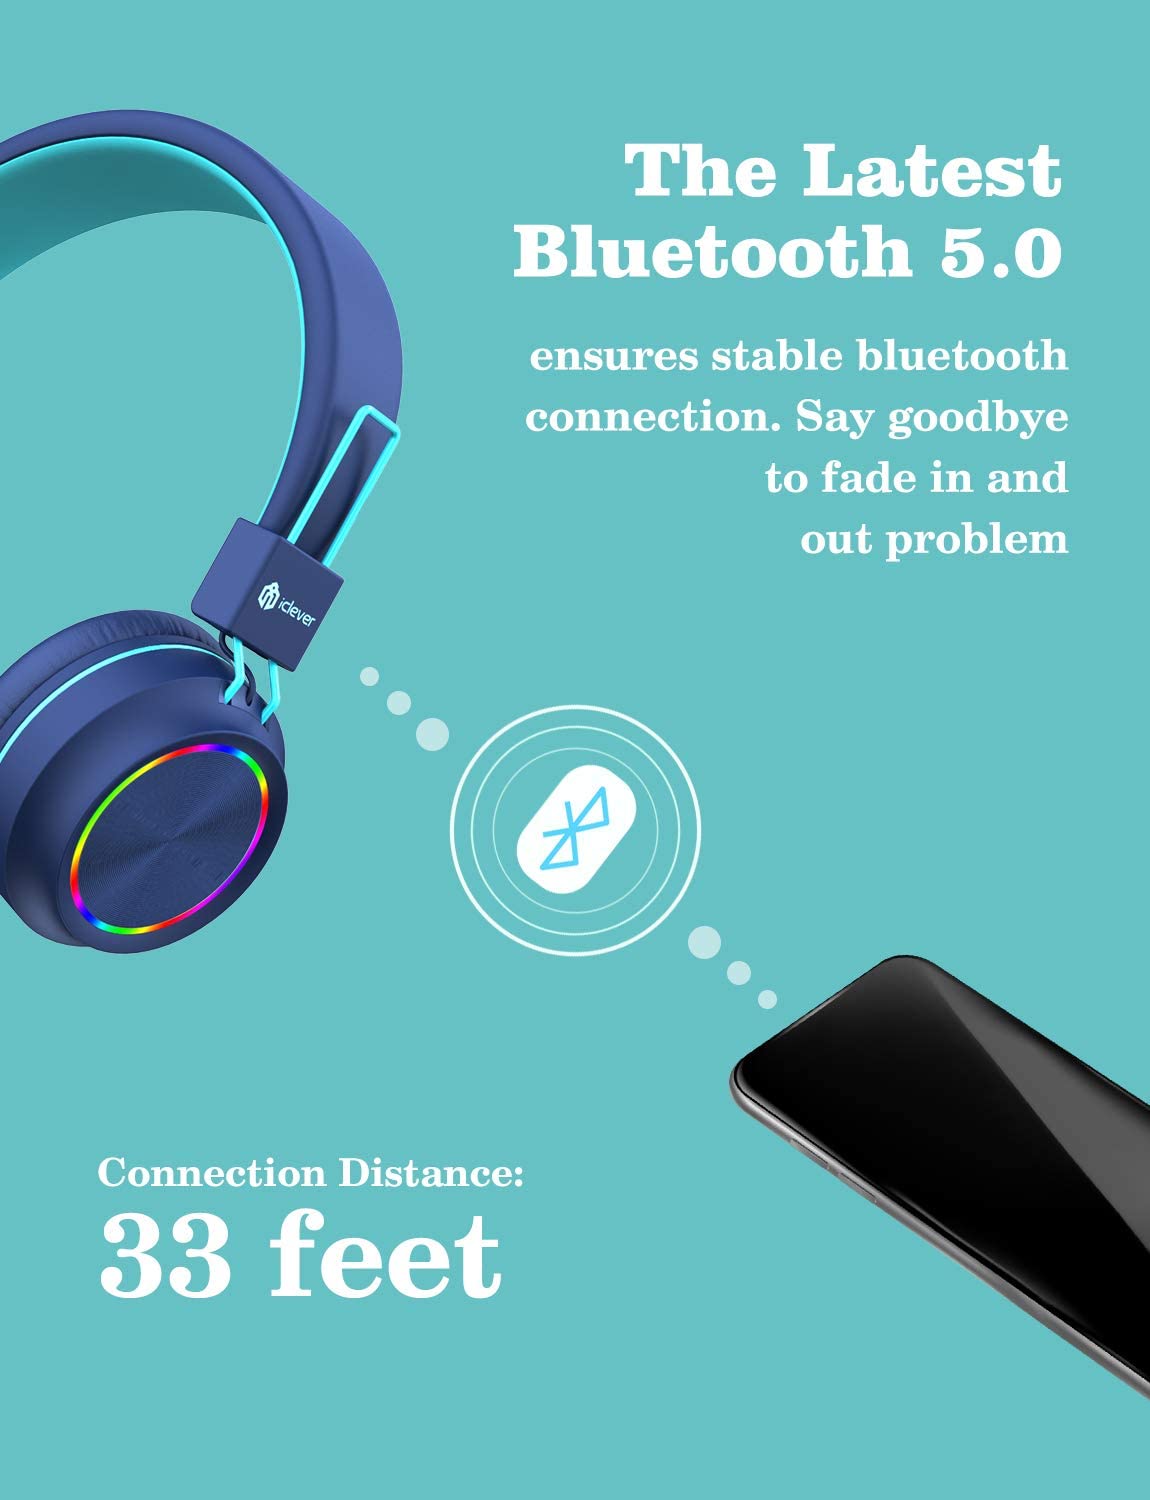 Casque audio microphone Bluetooth RGB BTH03 - iclever - pour Enfant - Neuf